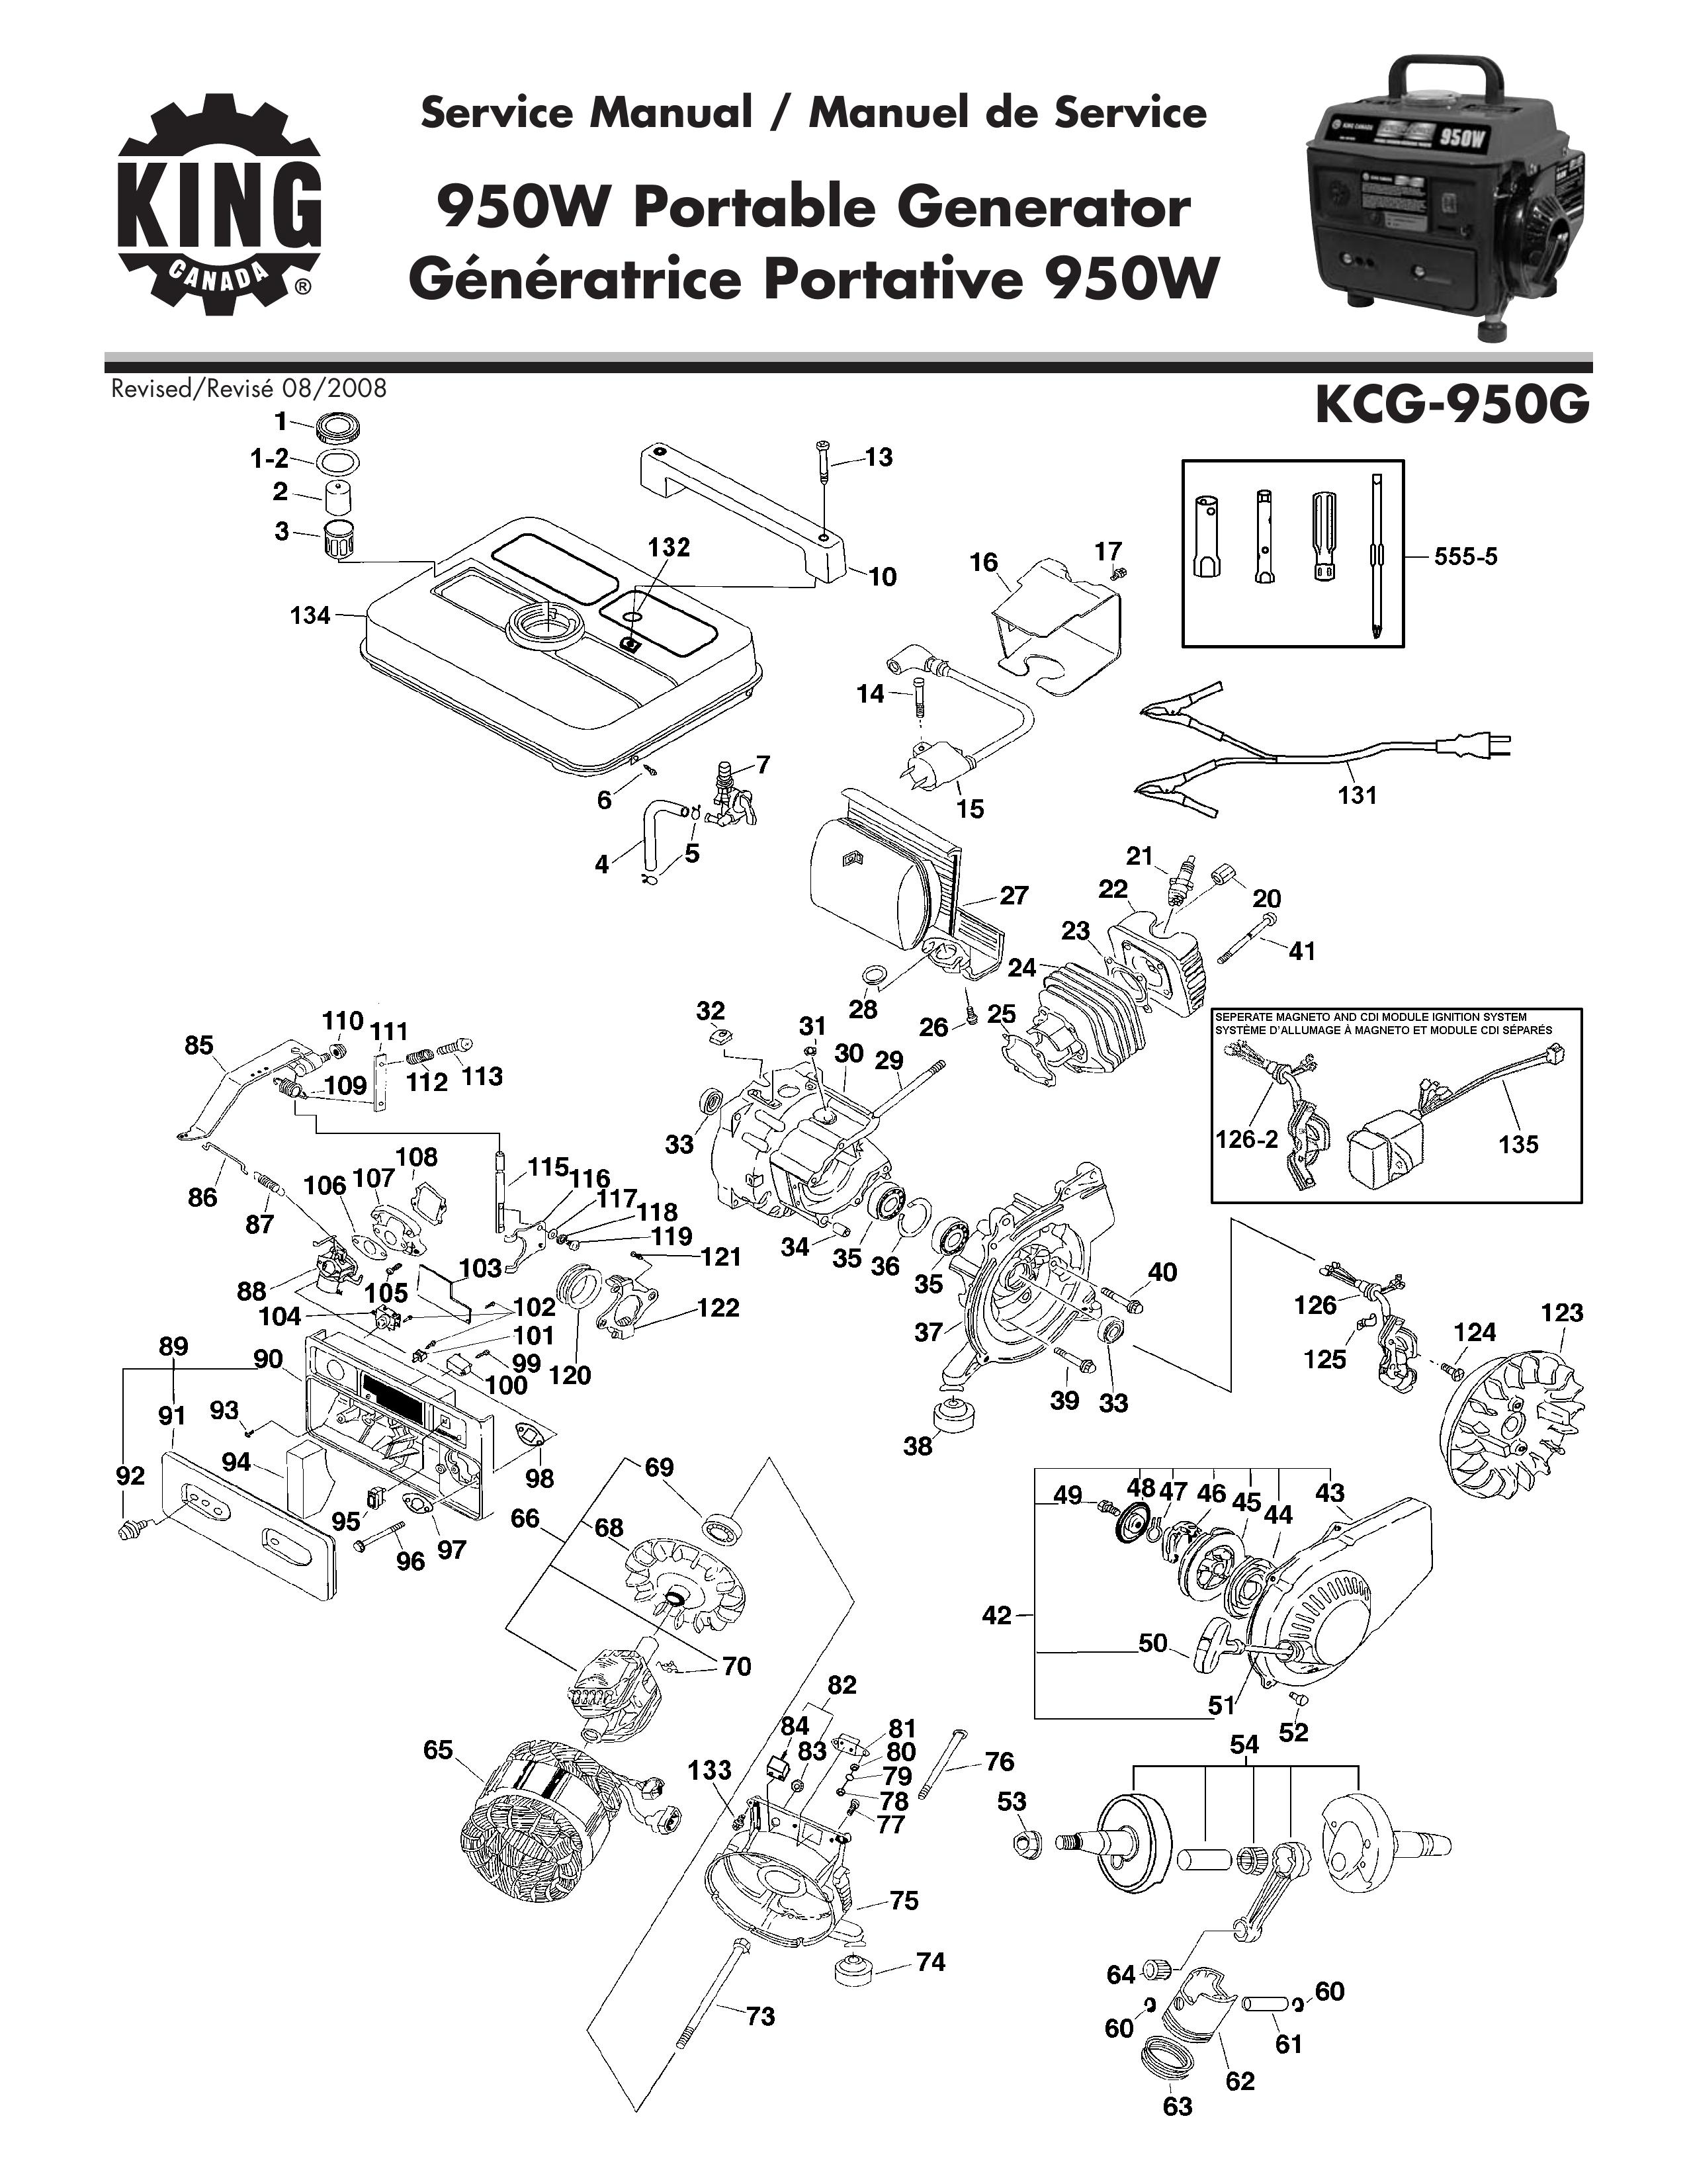 King Canada KCG-950G Portable Generator User Manual